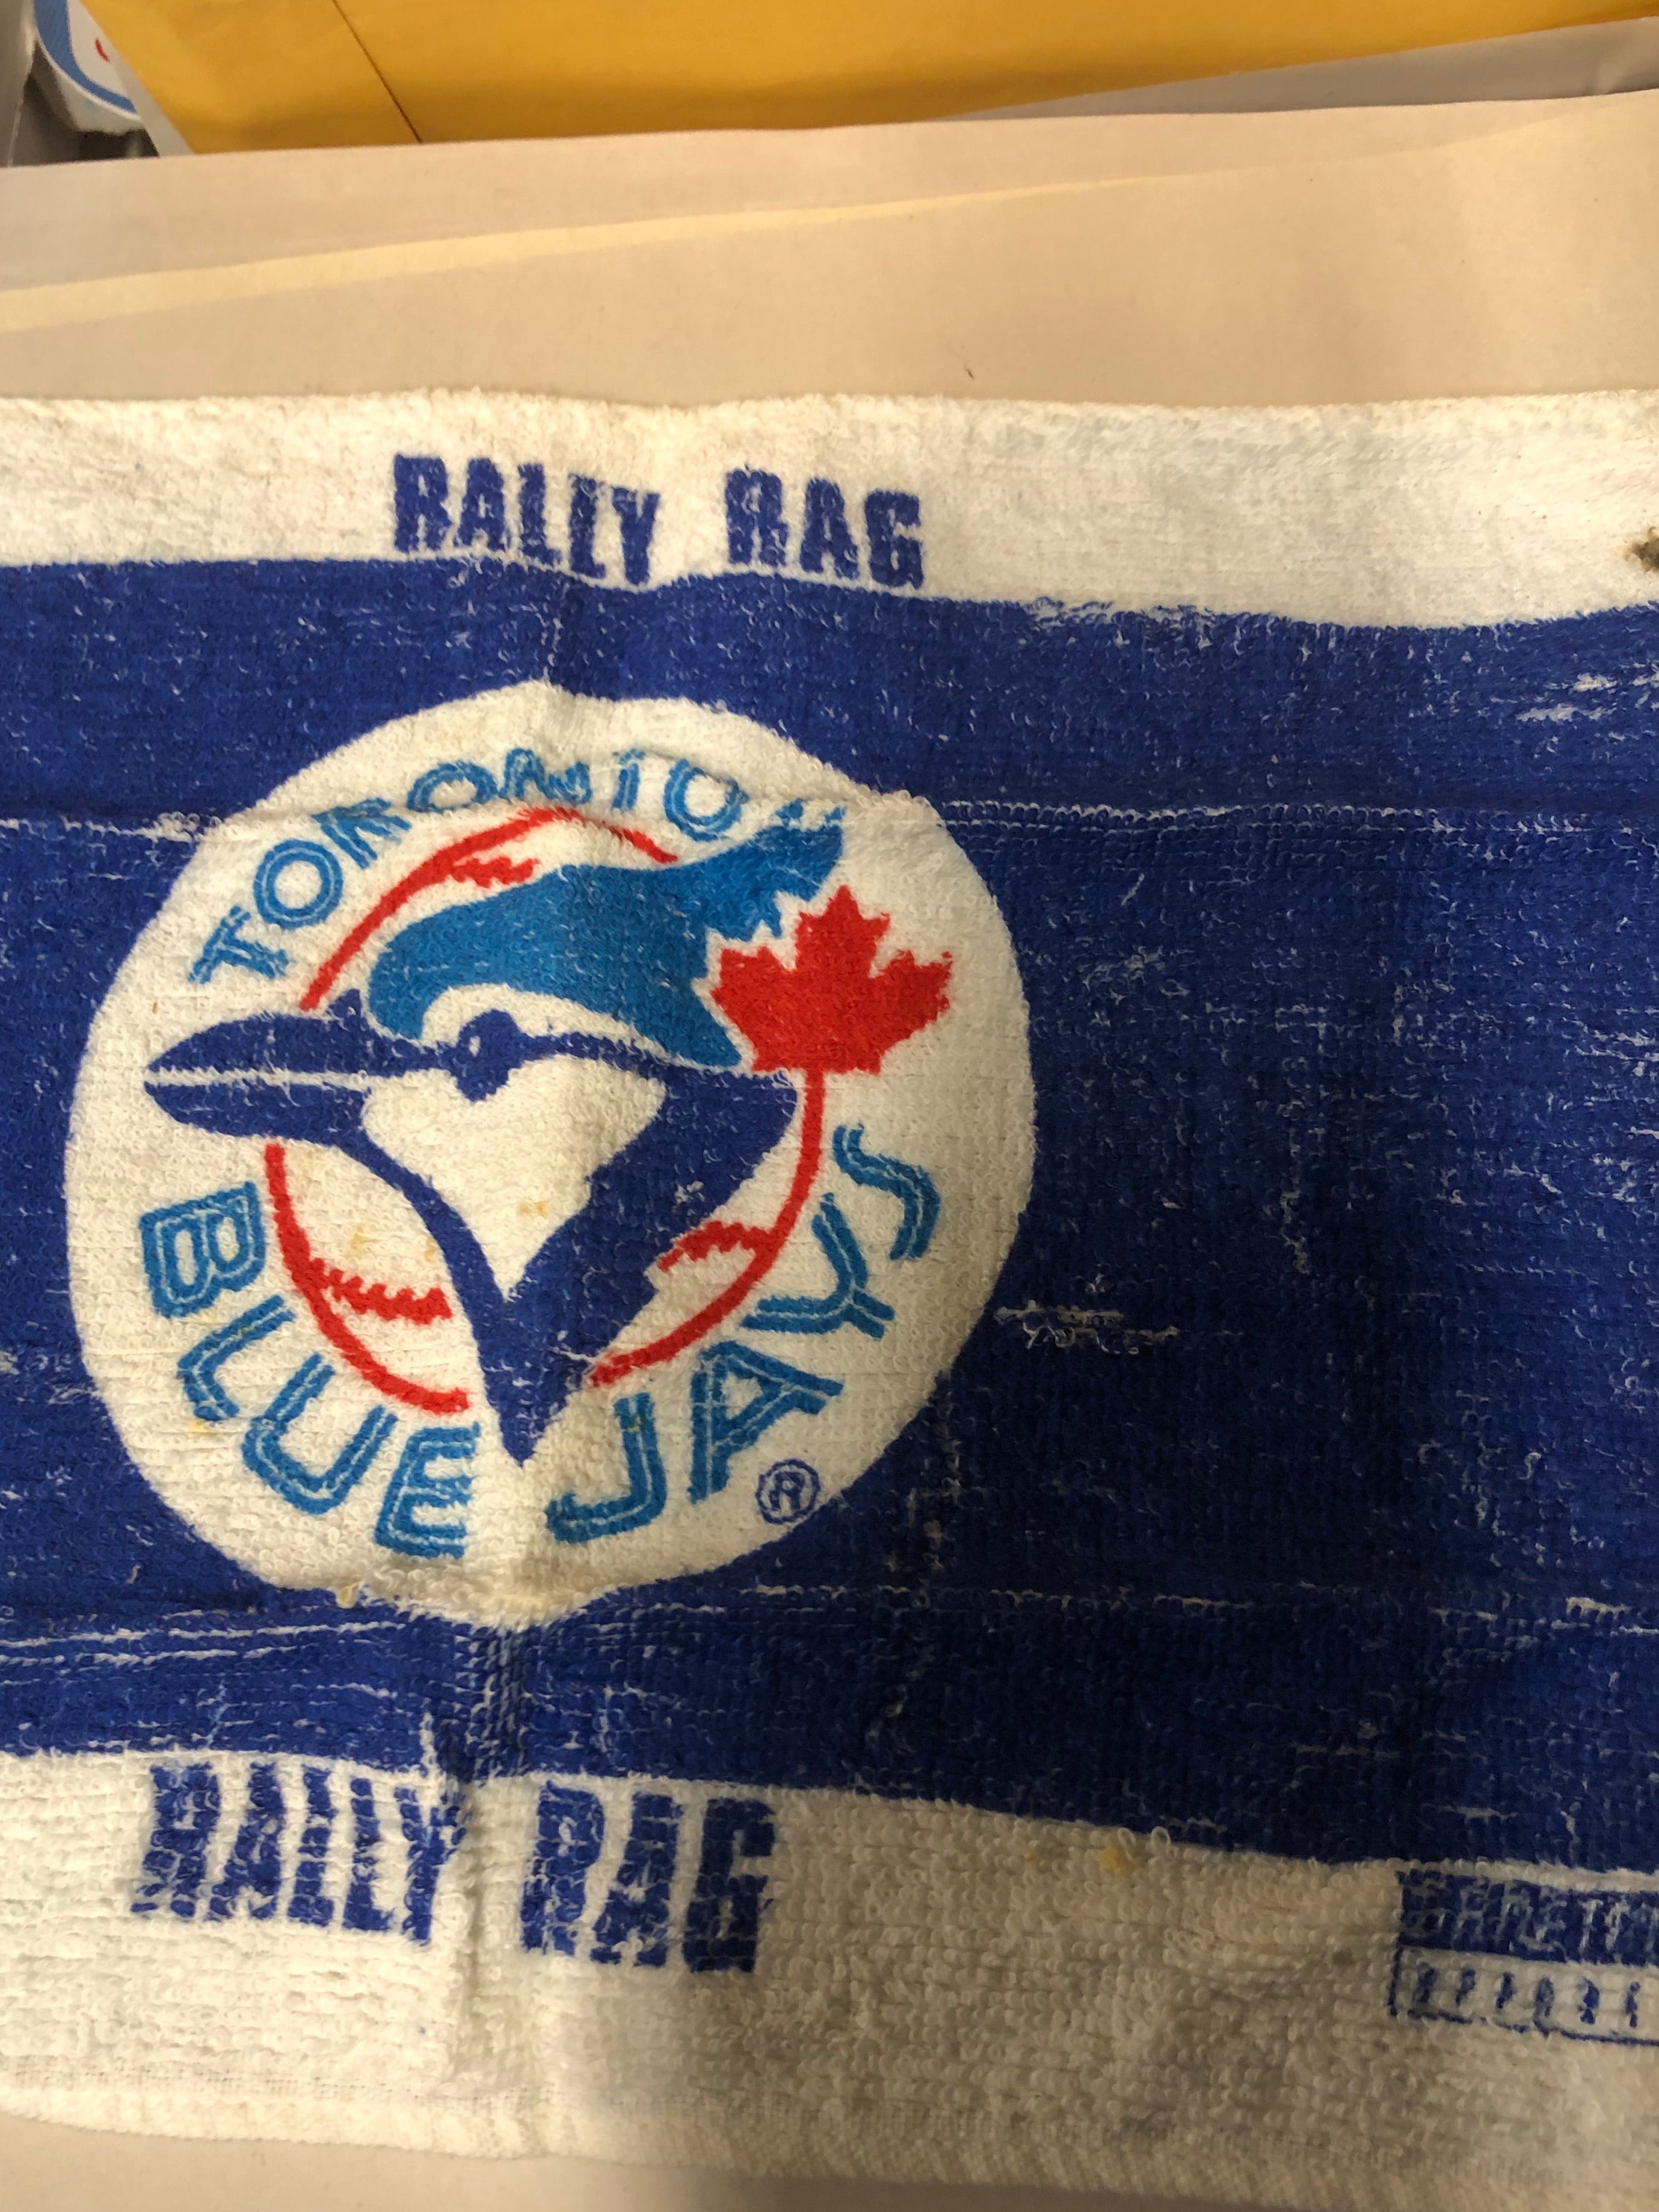 Toronto Blue Jays baseball rally tag 1990s